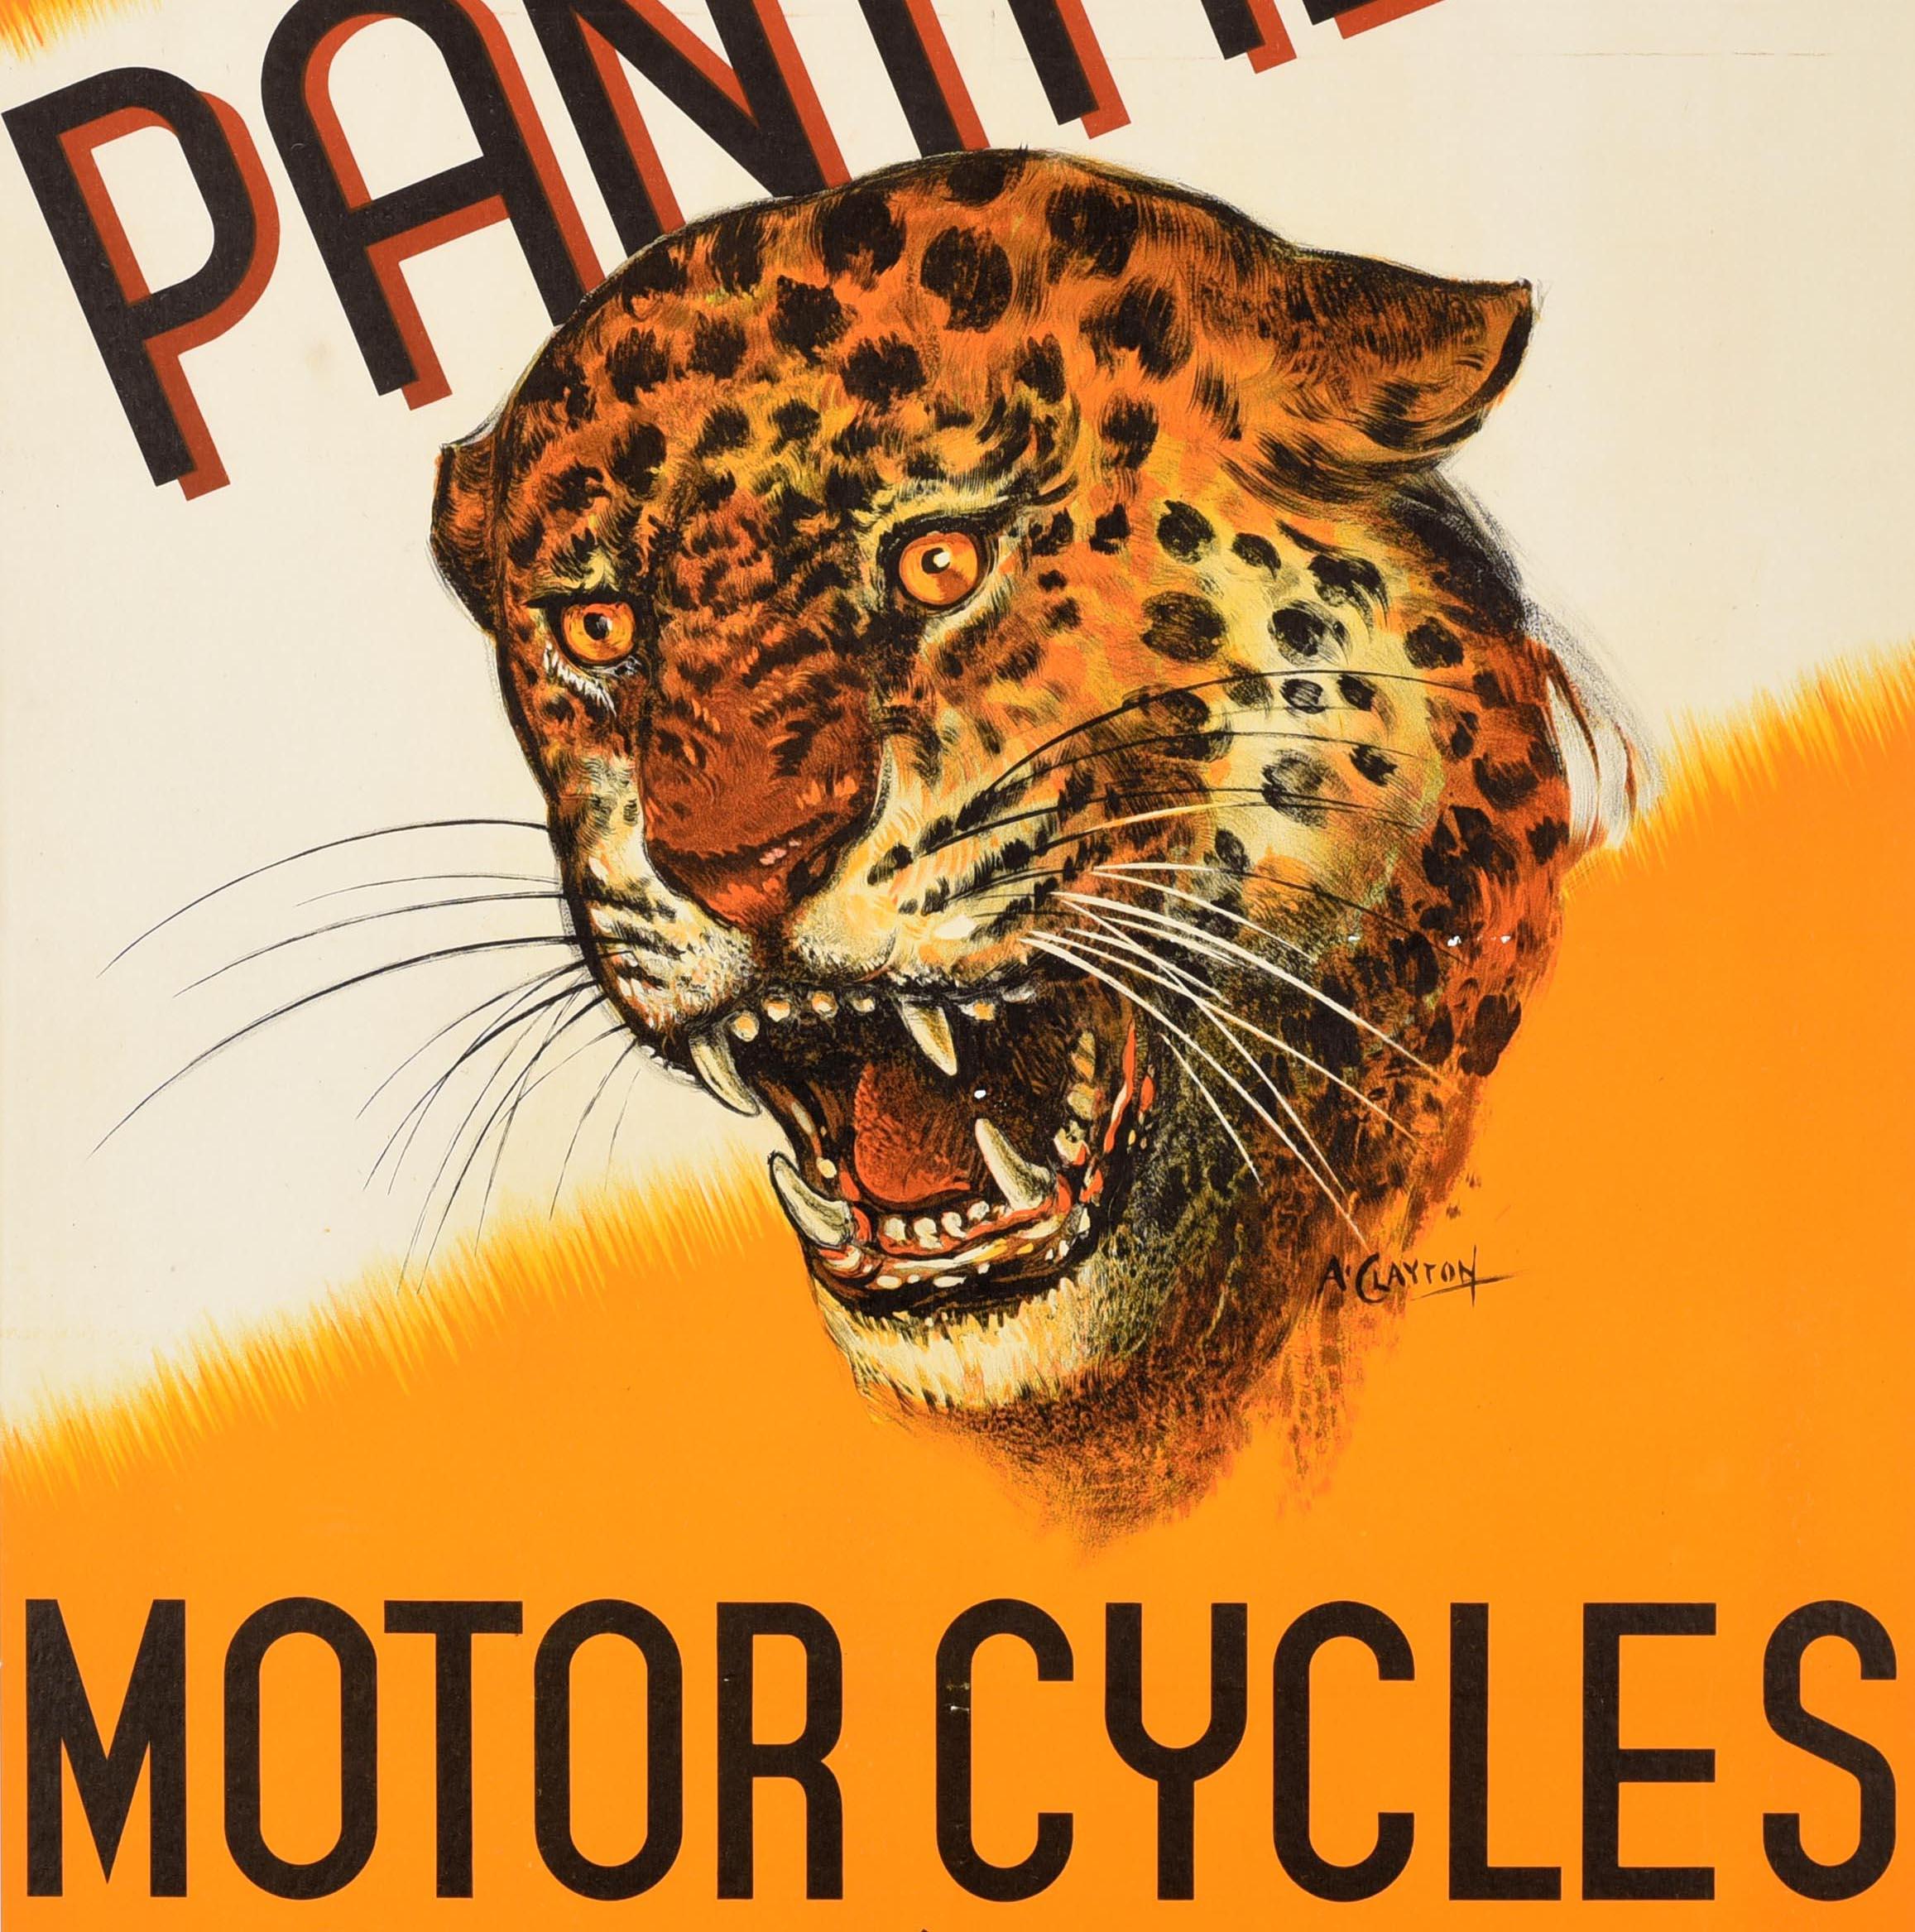 Original Vintage Advertising Poster Panther Motor Cycles Jaguar Motorcycle Art - Print by Al Clayton